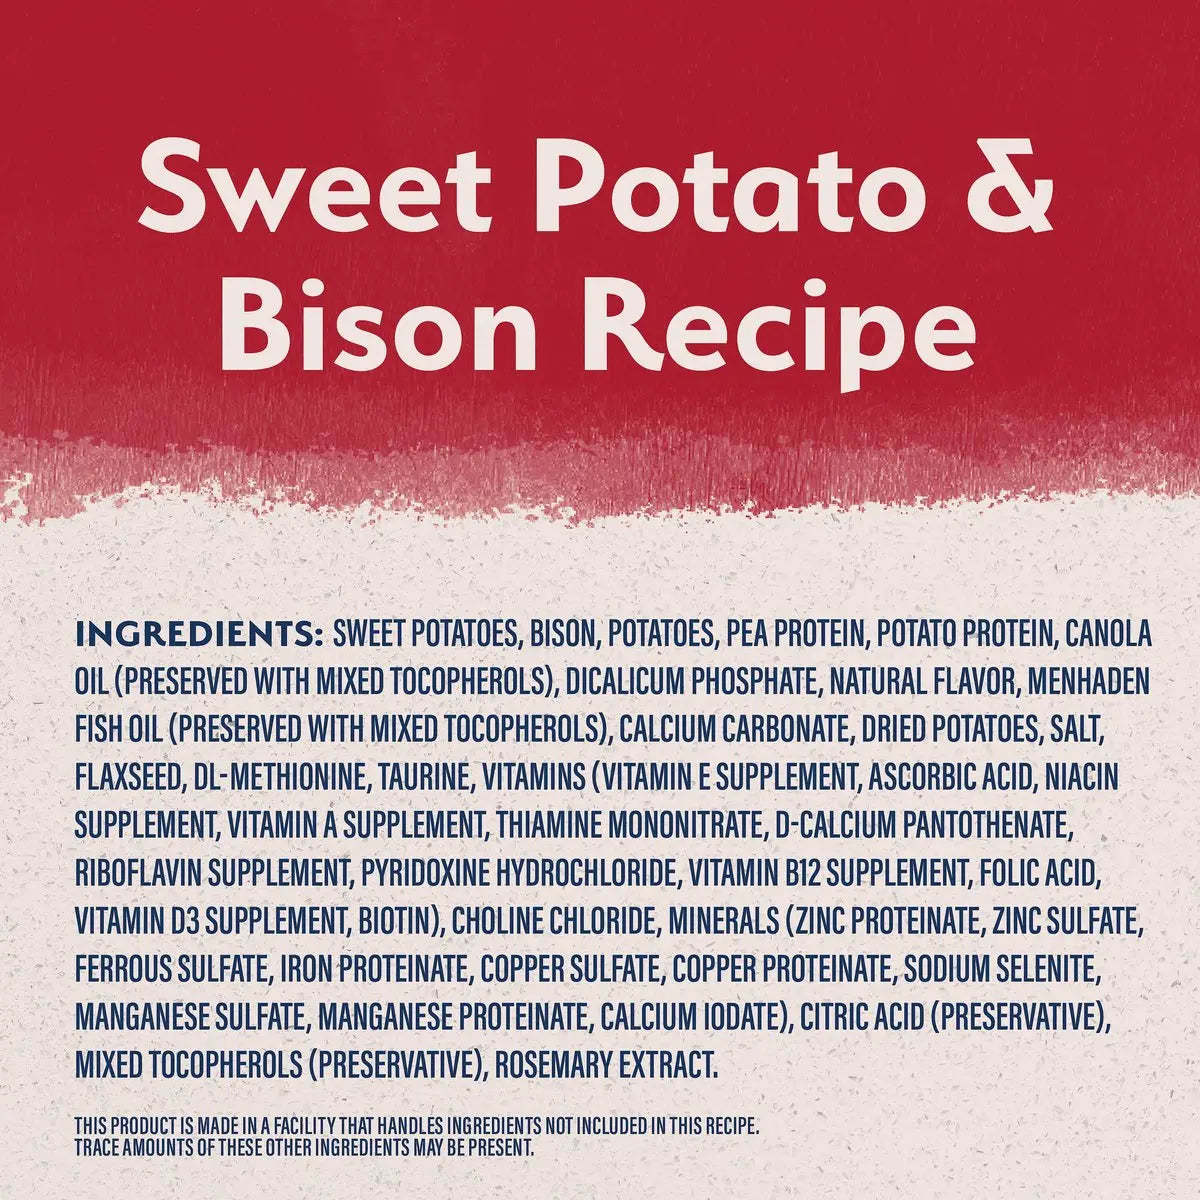 Natural Balance Pet Foods L.I.D. Sweet Potato and Bison Adult Dry Dog Food Natural Balance CPD